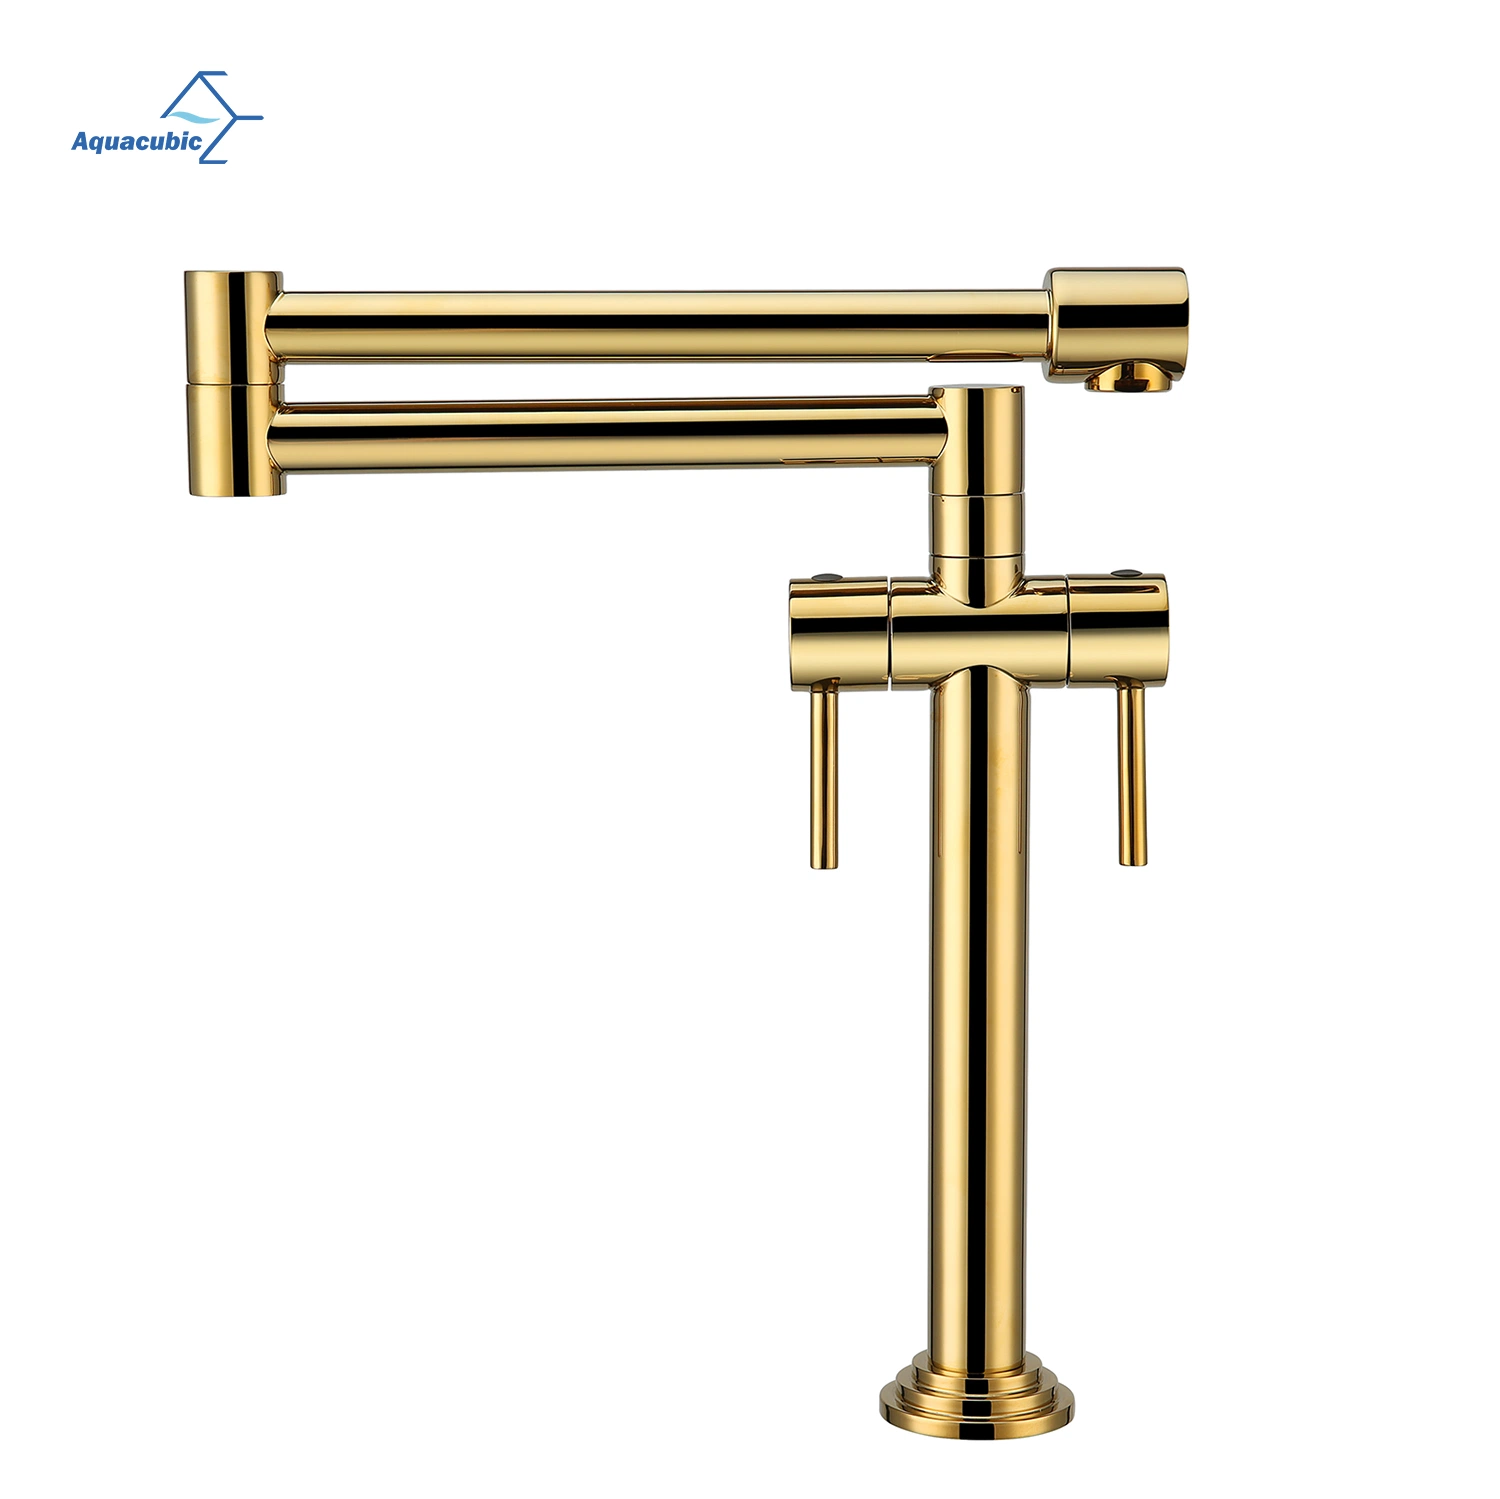 Double Lever Handle with Dual Joint Swing Arm Sink Faucet Titanium Gold Kitchen Pot Filler Faucet